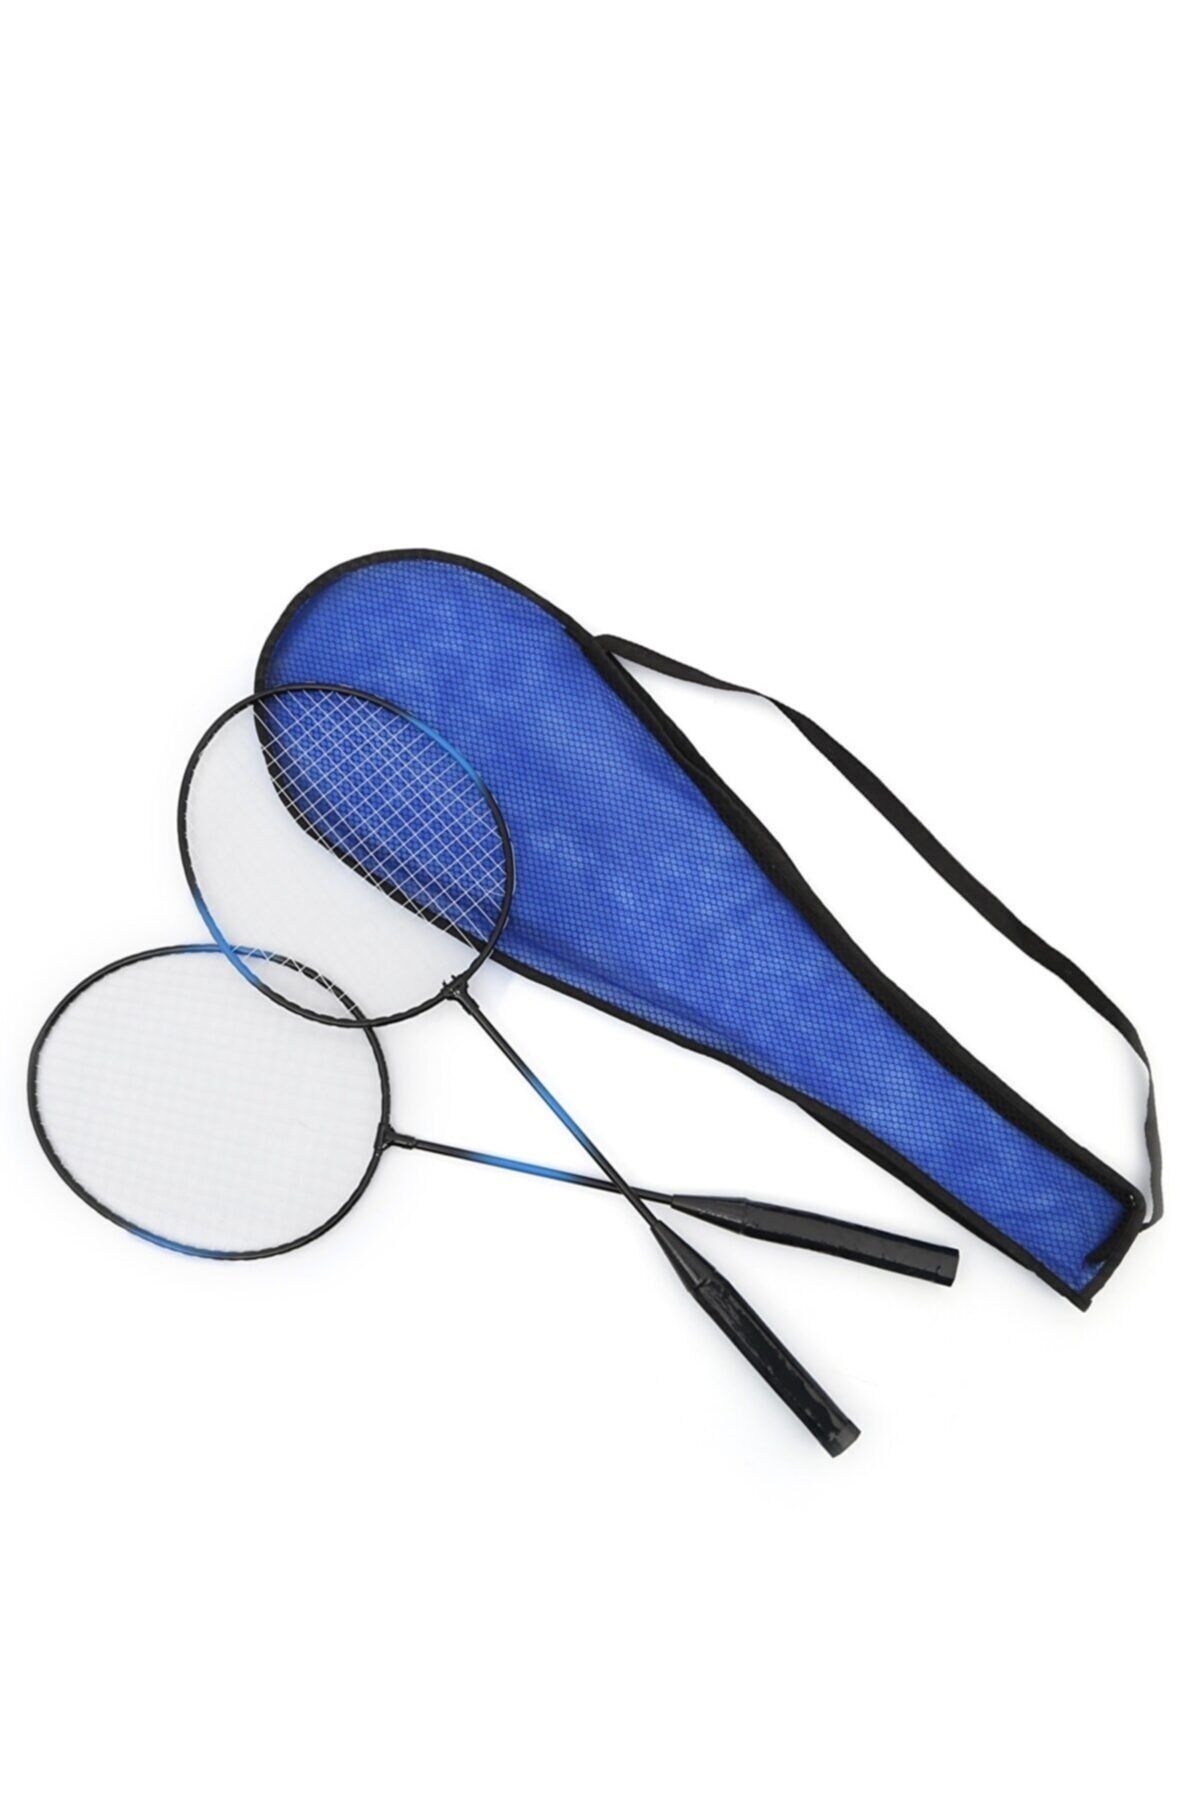 ÖZBEK Badminton Raketi Set 2 Raket + 1 Top File Çantalı Model